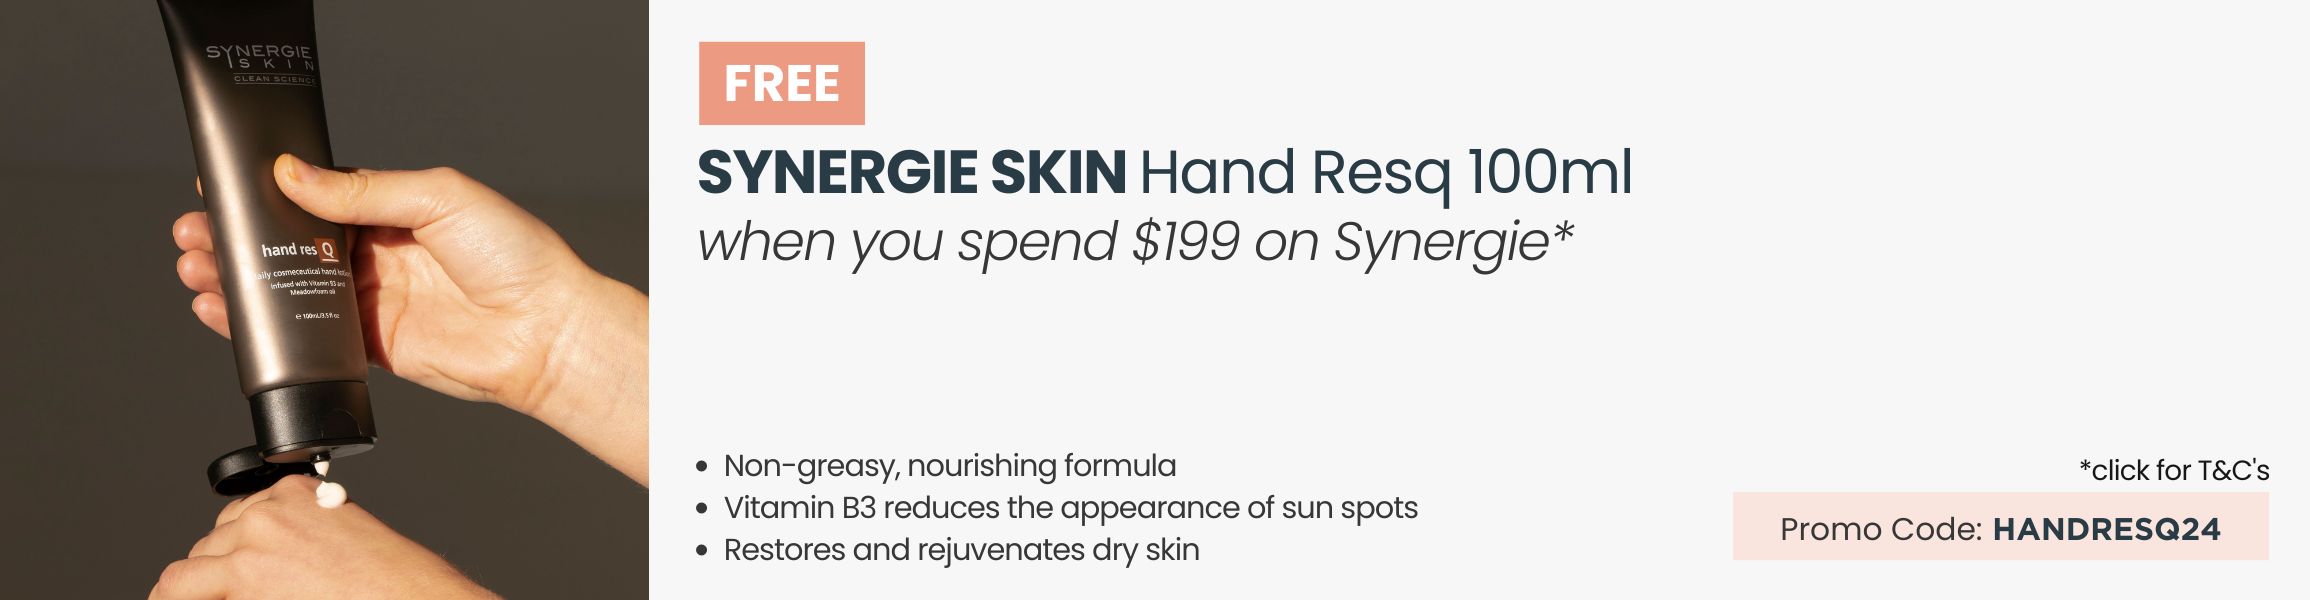 FREE Synergie Skin Hand ResQ 100ml worth $49. Min spend $199 on Synergie. Promo Code: HANDRESQ24